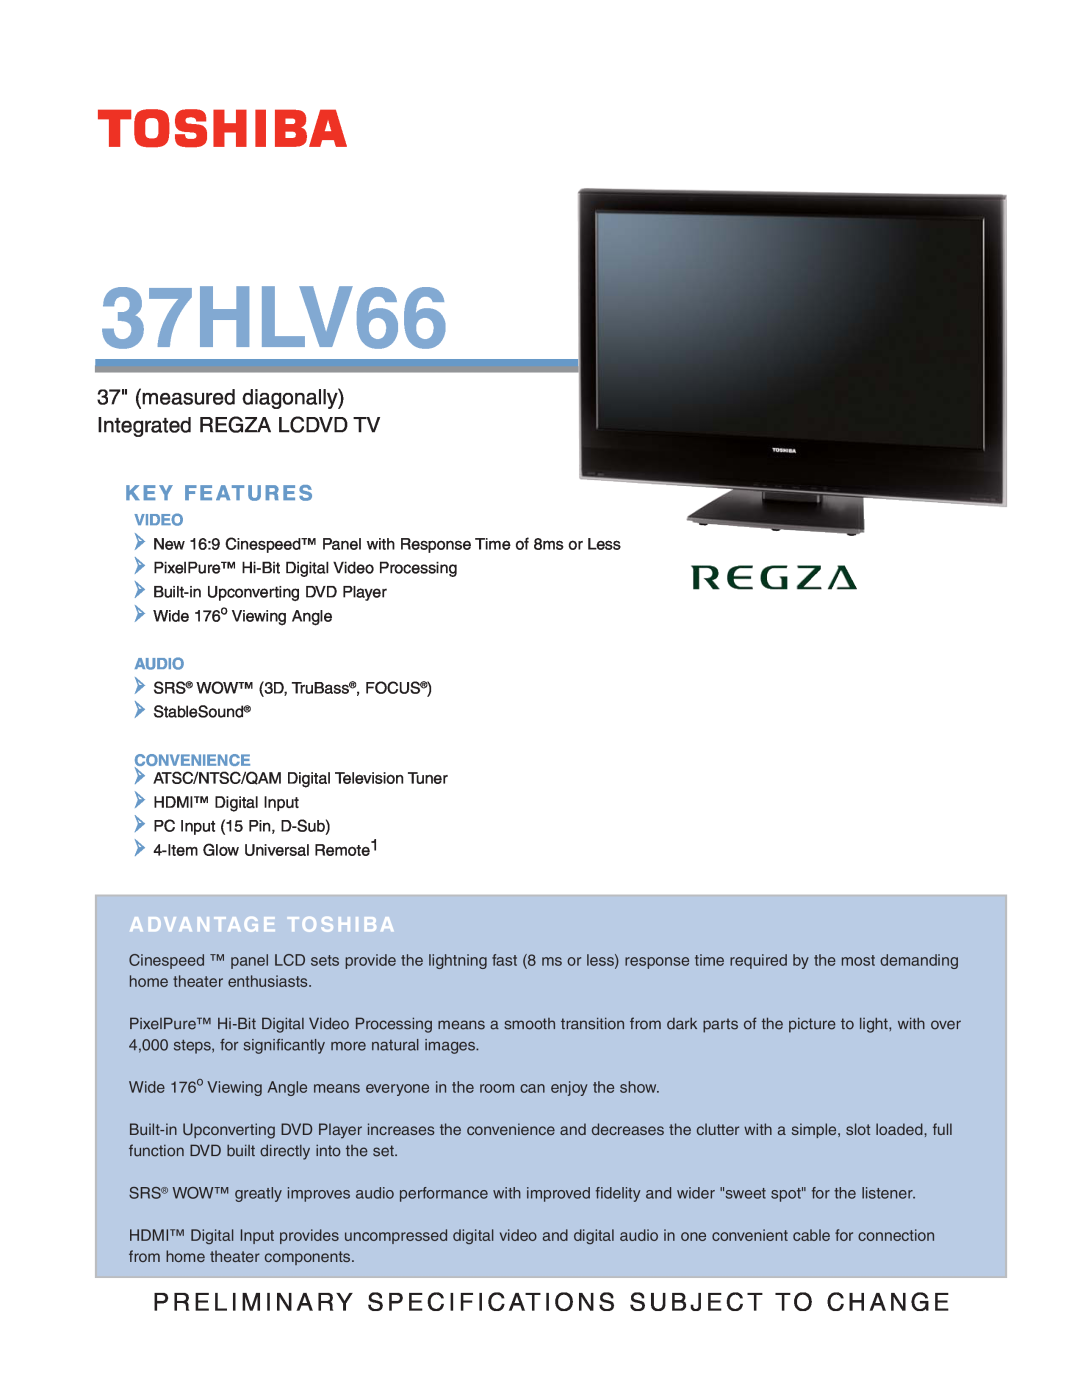 Toshiba 37HLV66 specifications Key Features, measured diagonally Integrated REGZA LCDVD TV, Advantage Toshiba, Video 